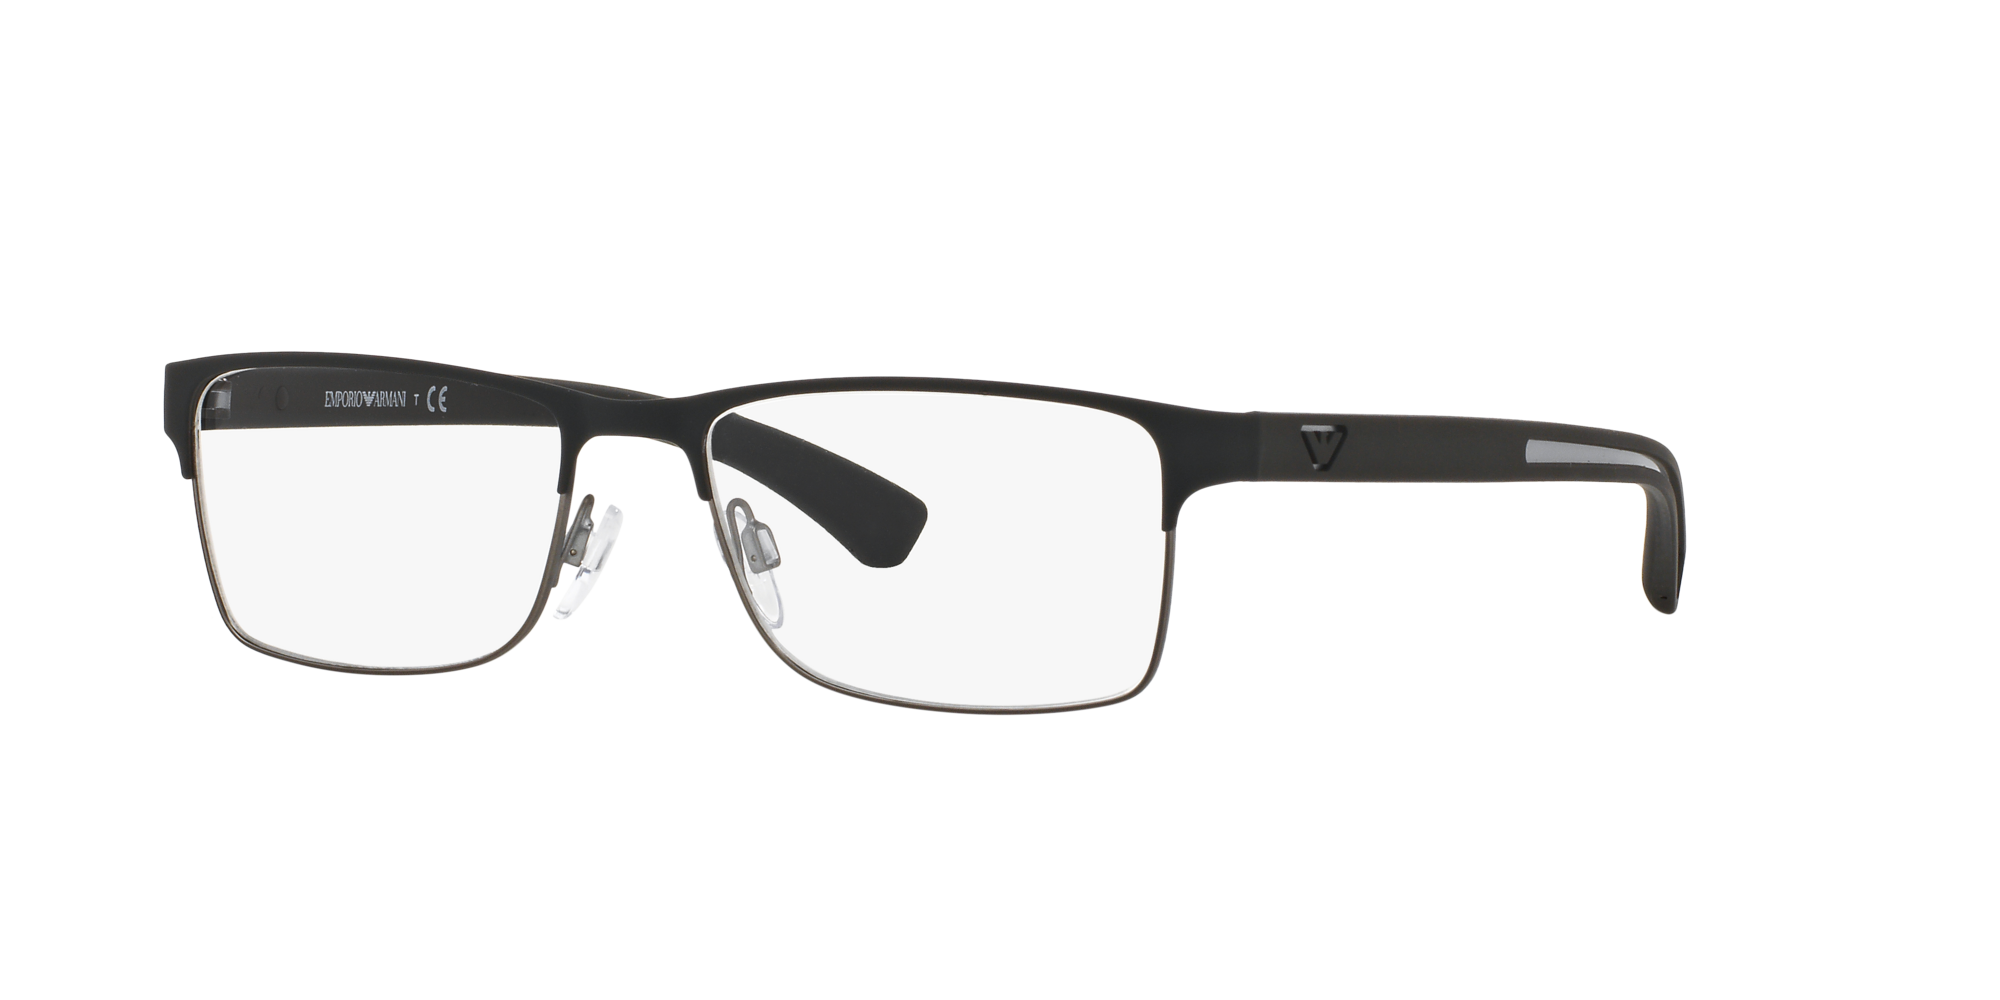 Angle_Left01 Emporio Armani EA 1052 Glasses Transparent / Black